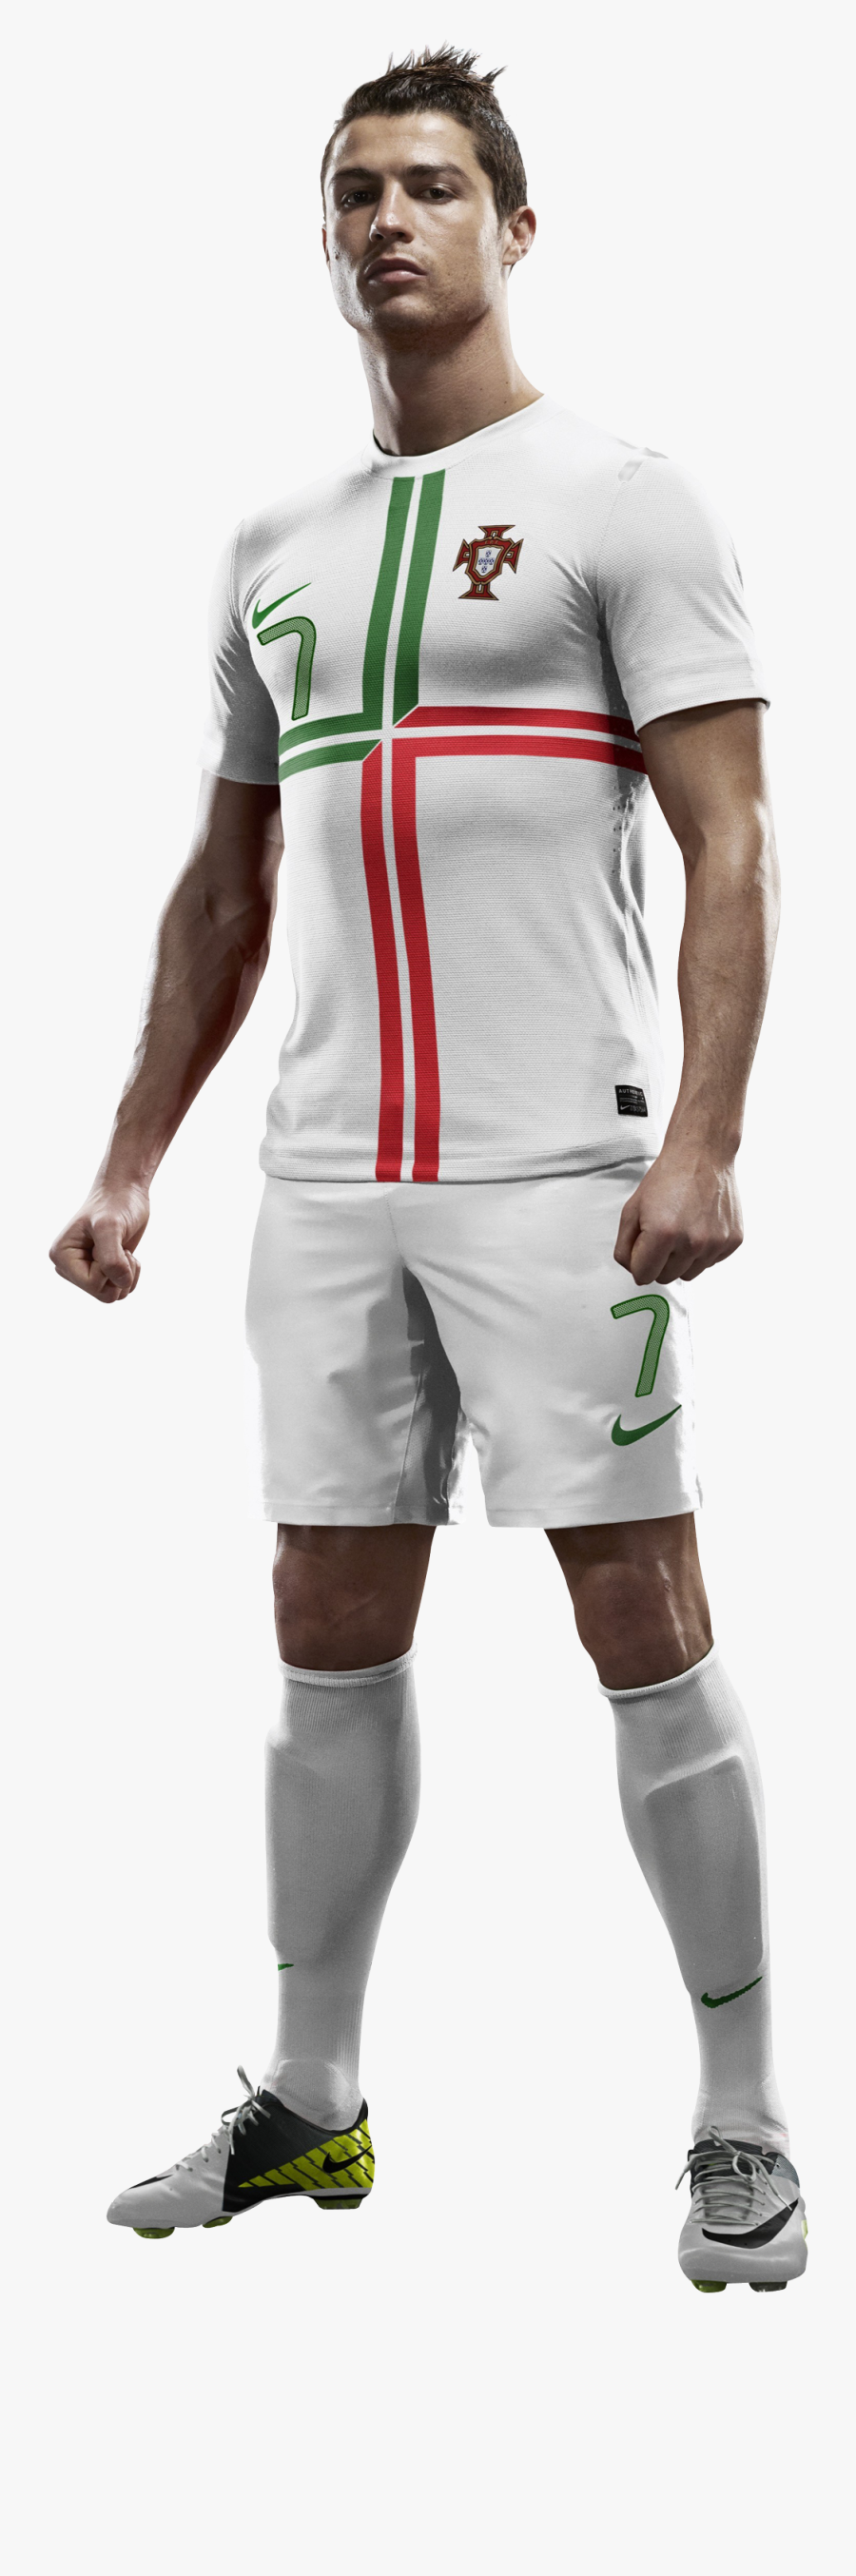 Real Cristiano Portugal Madrid Ronaldo Football Player - Cristiano Ronaldo Less Shirt, Transparent Clipart